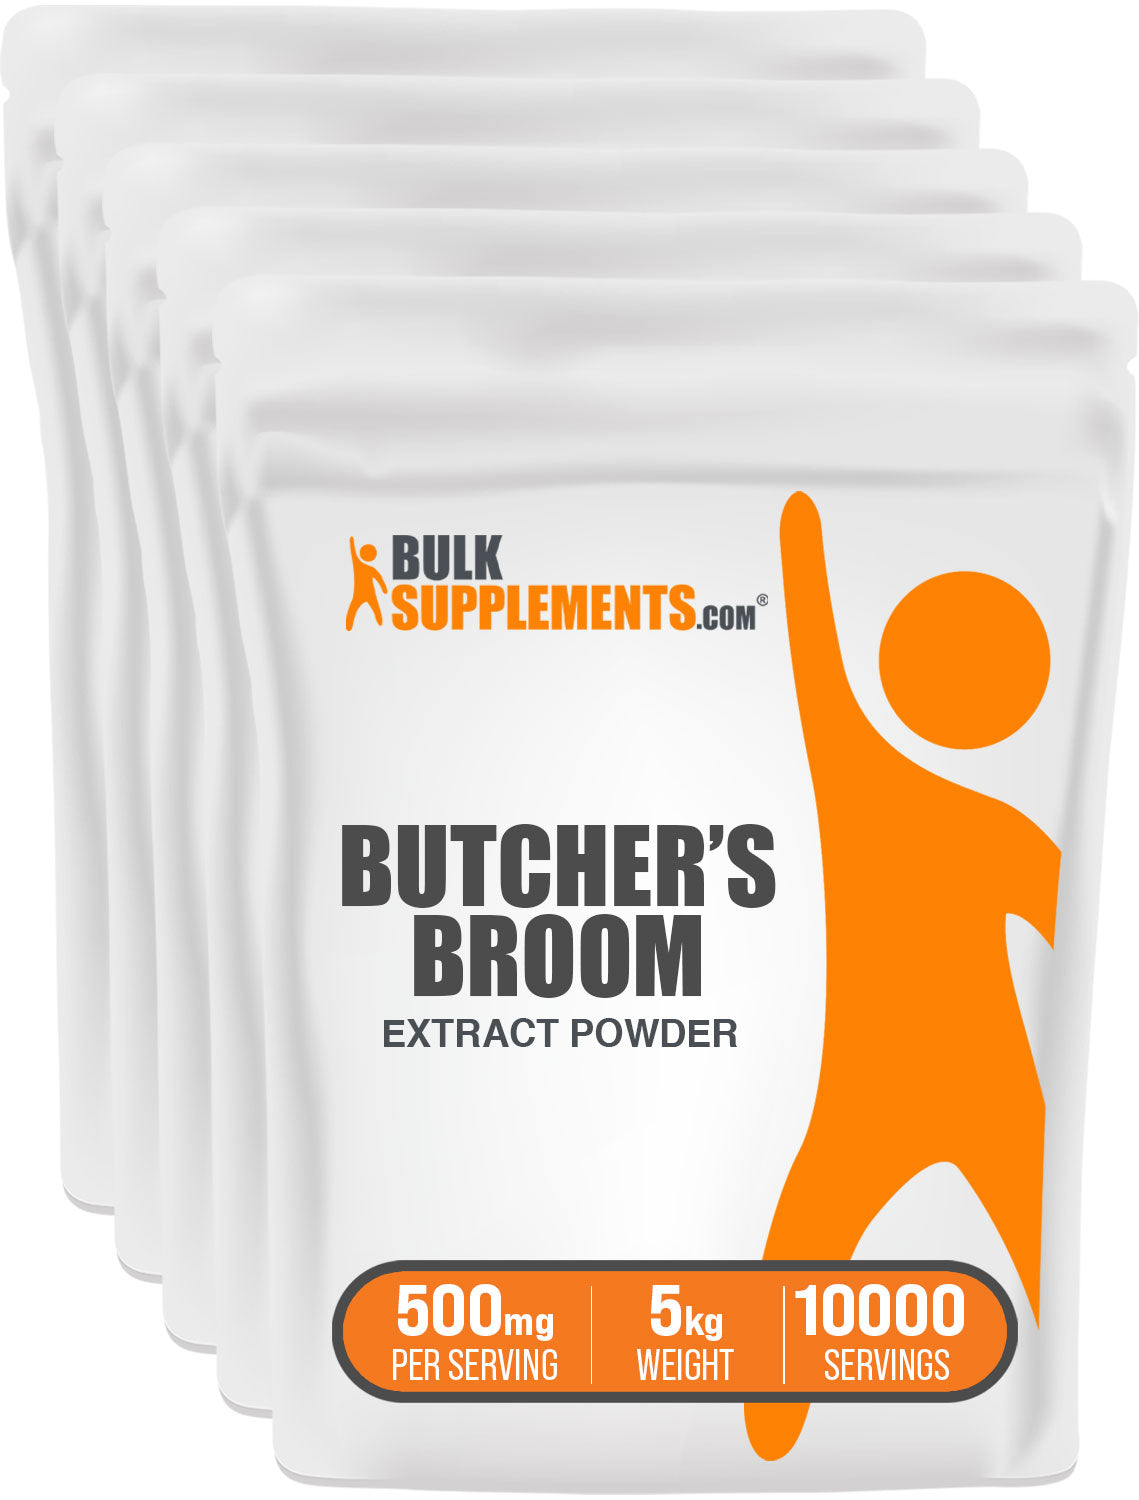 BulkSupplements Butcher's Broom Extract Powder 5 Kilograms set of 5 bags